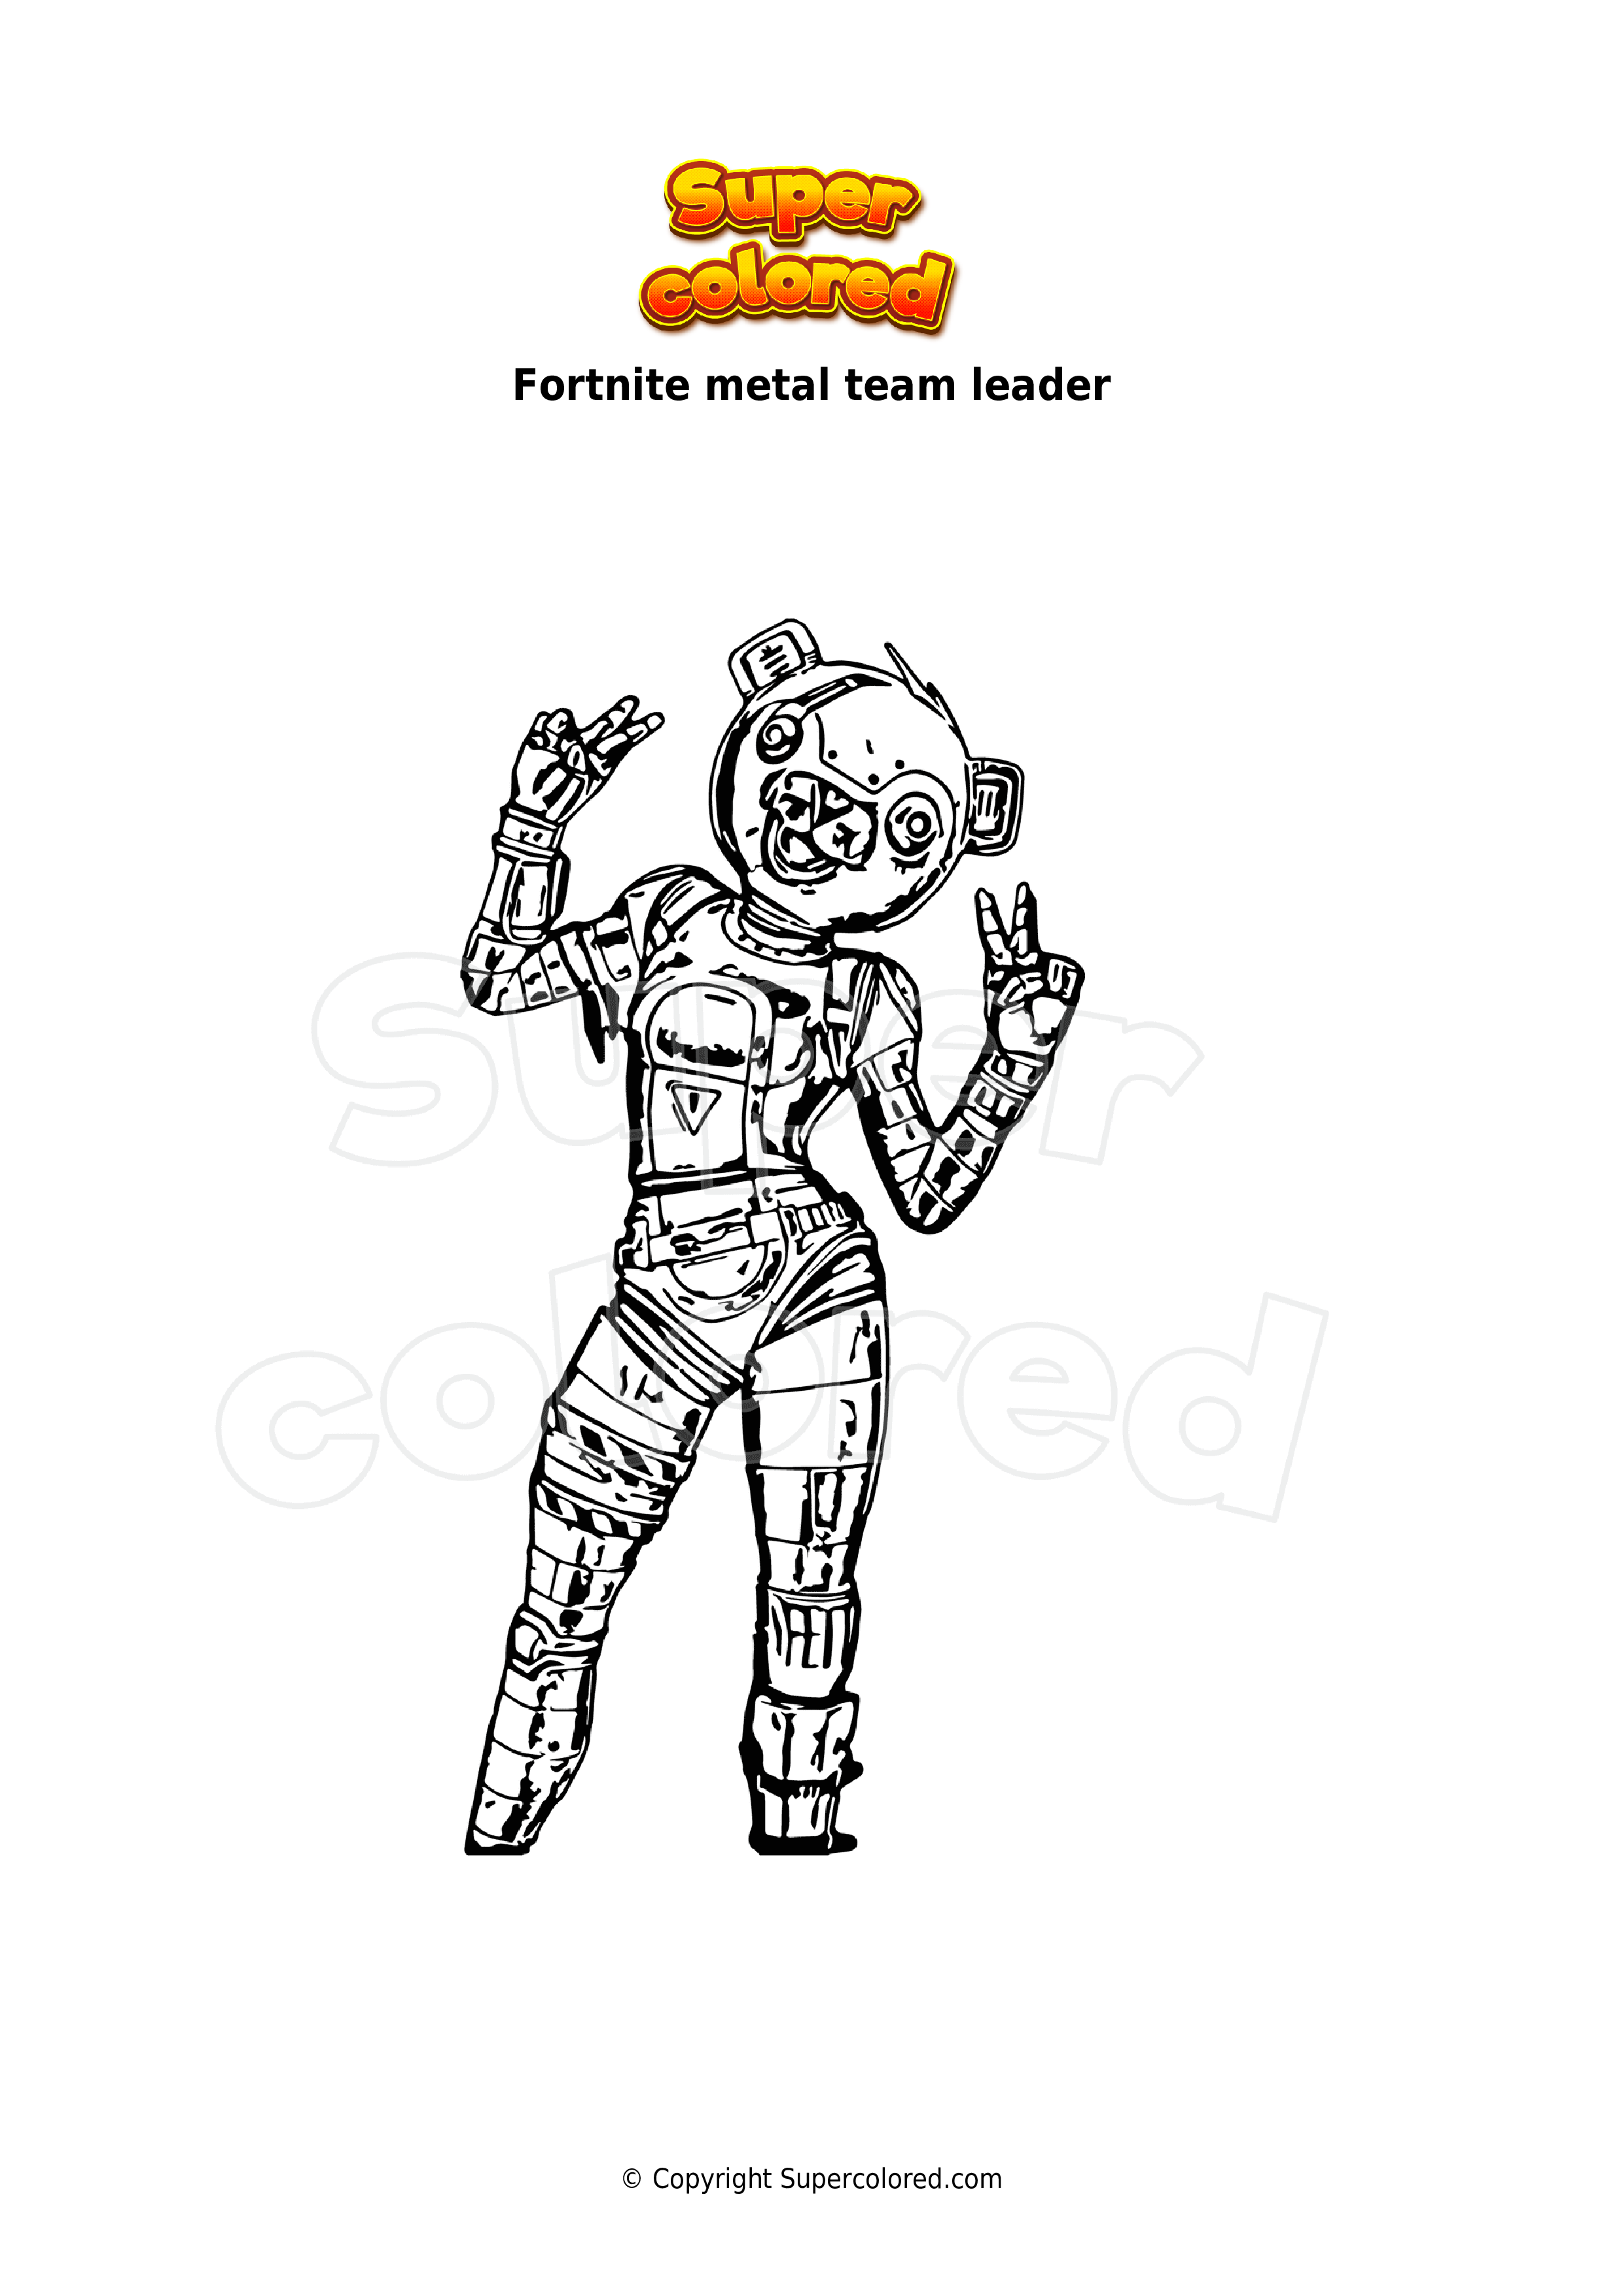 Ausmalbild Fortnite metal team leader - Supercolored.com